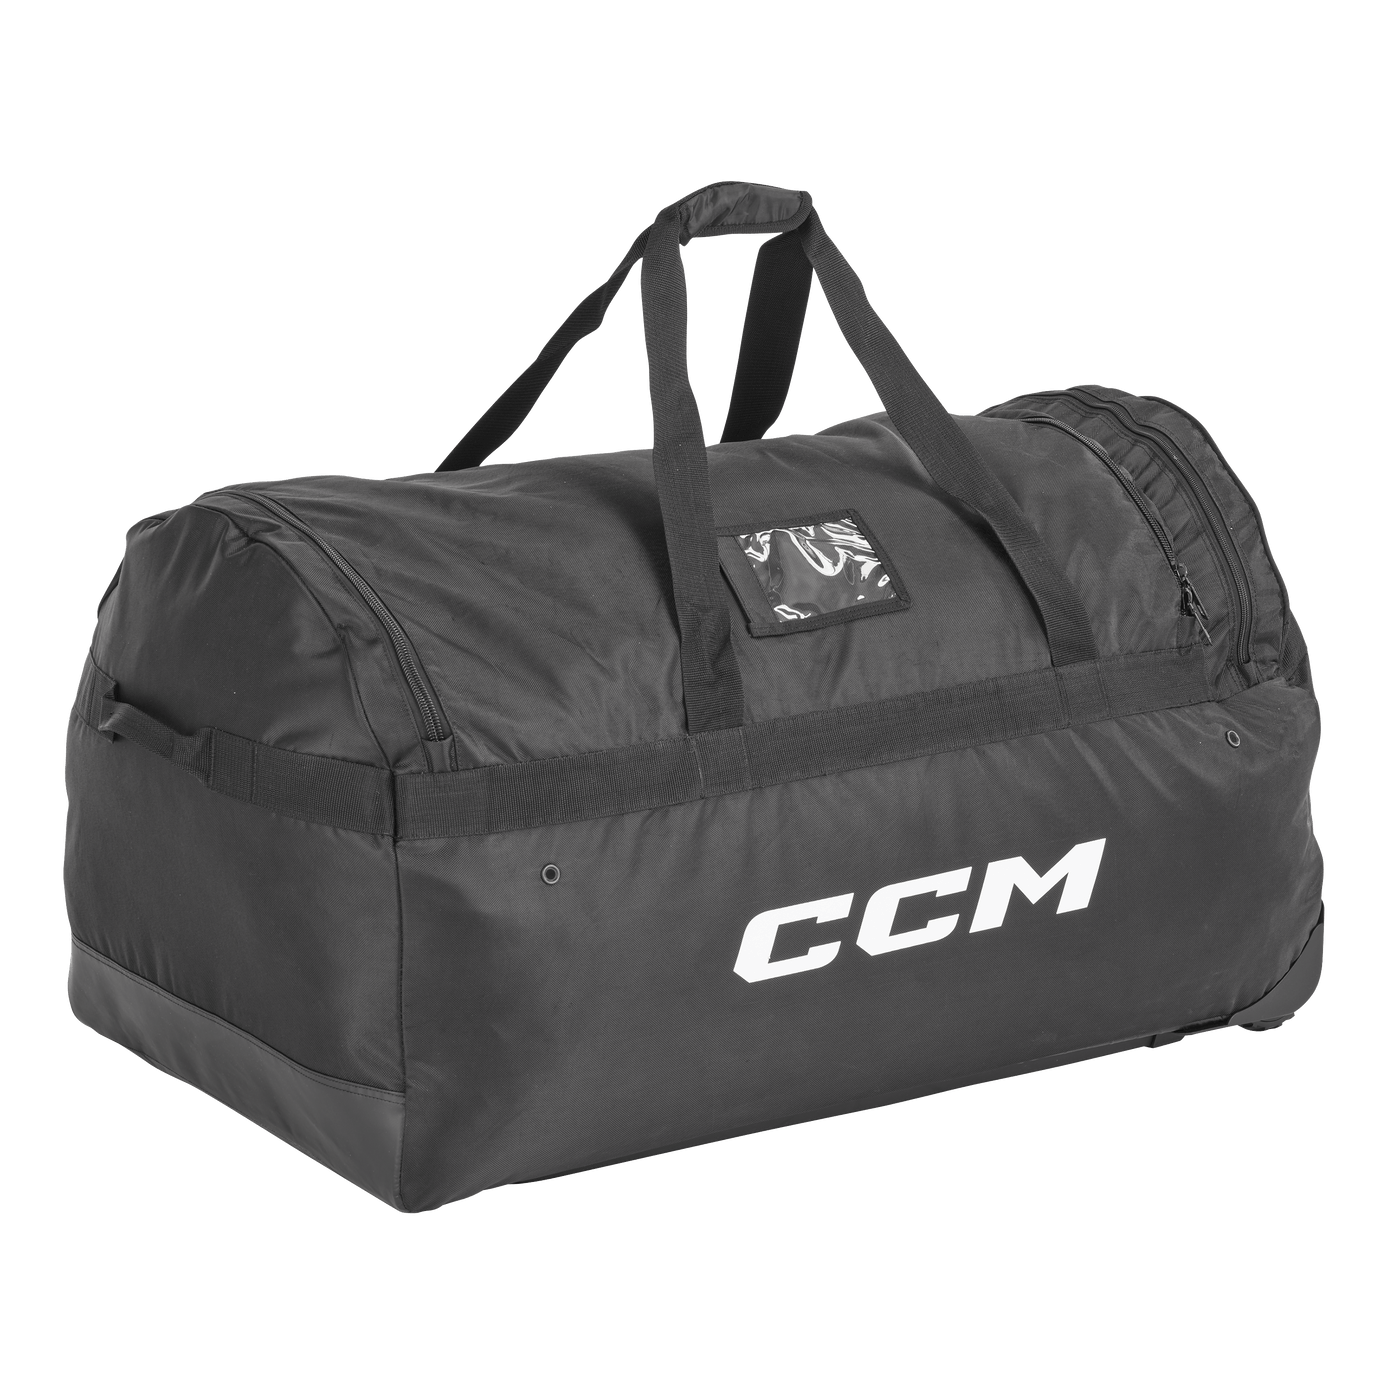 CCM 470 Premium Junior Wheel Hockey Bag - The Hockey Shop Source For Sports